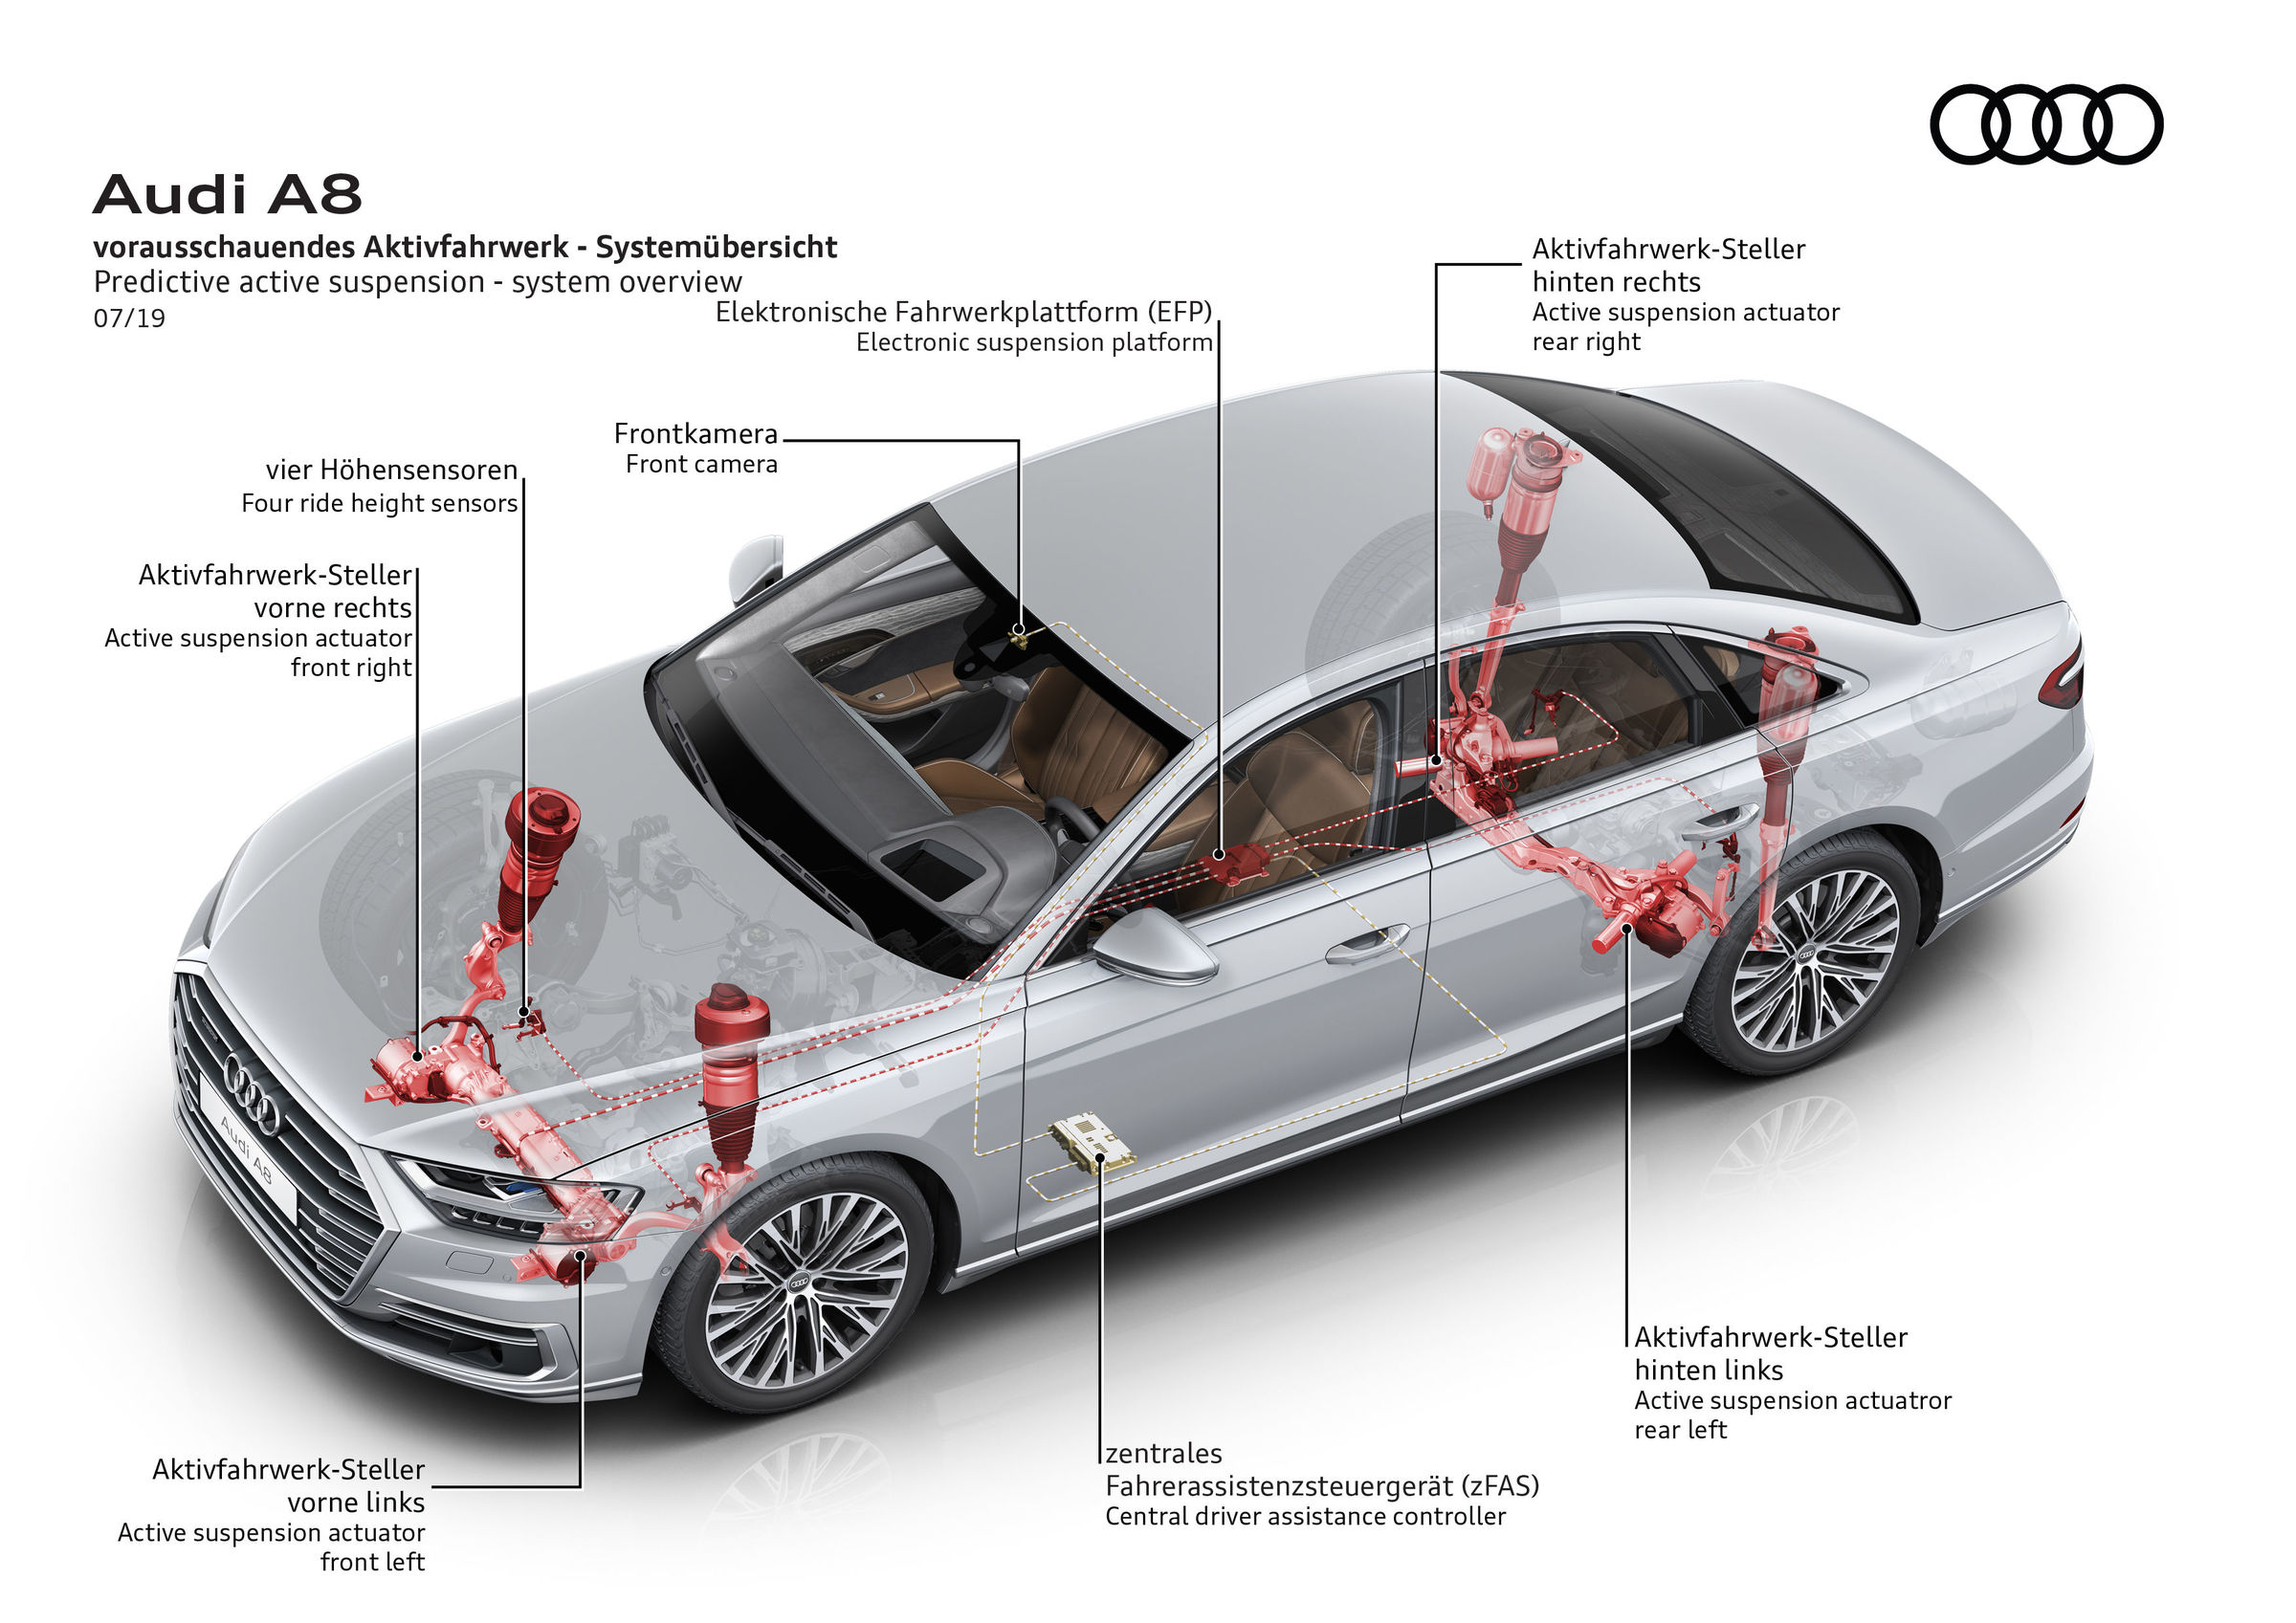 Audi A8 predictive active suspension 2